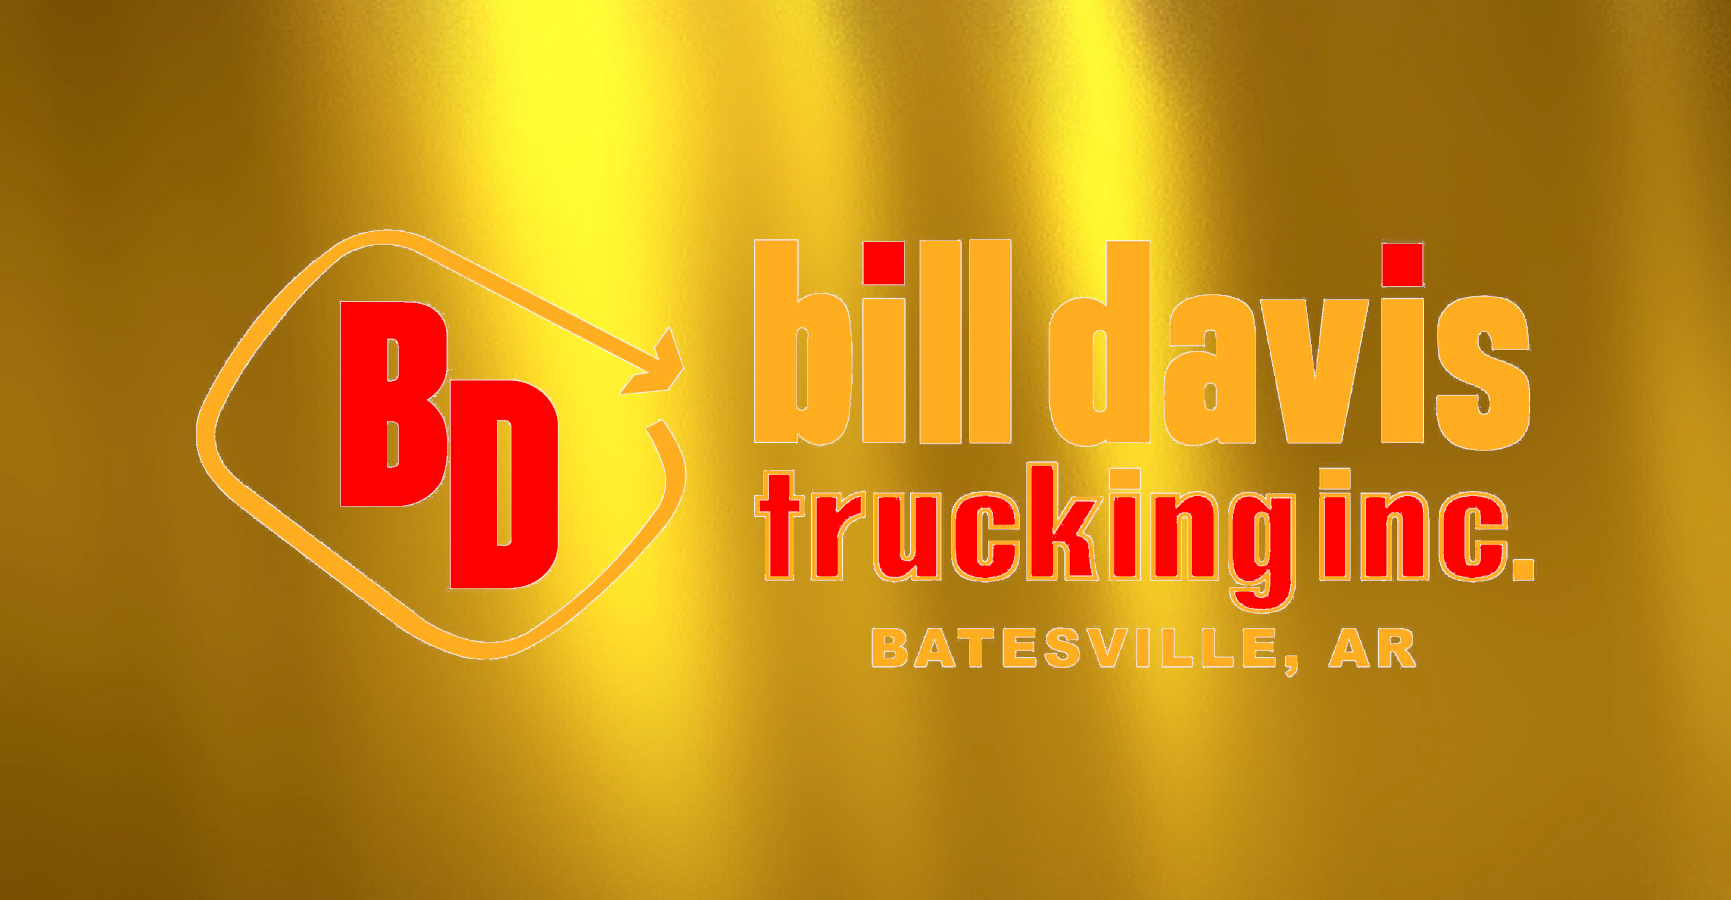 Bill Davis Trucking logo.jpg